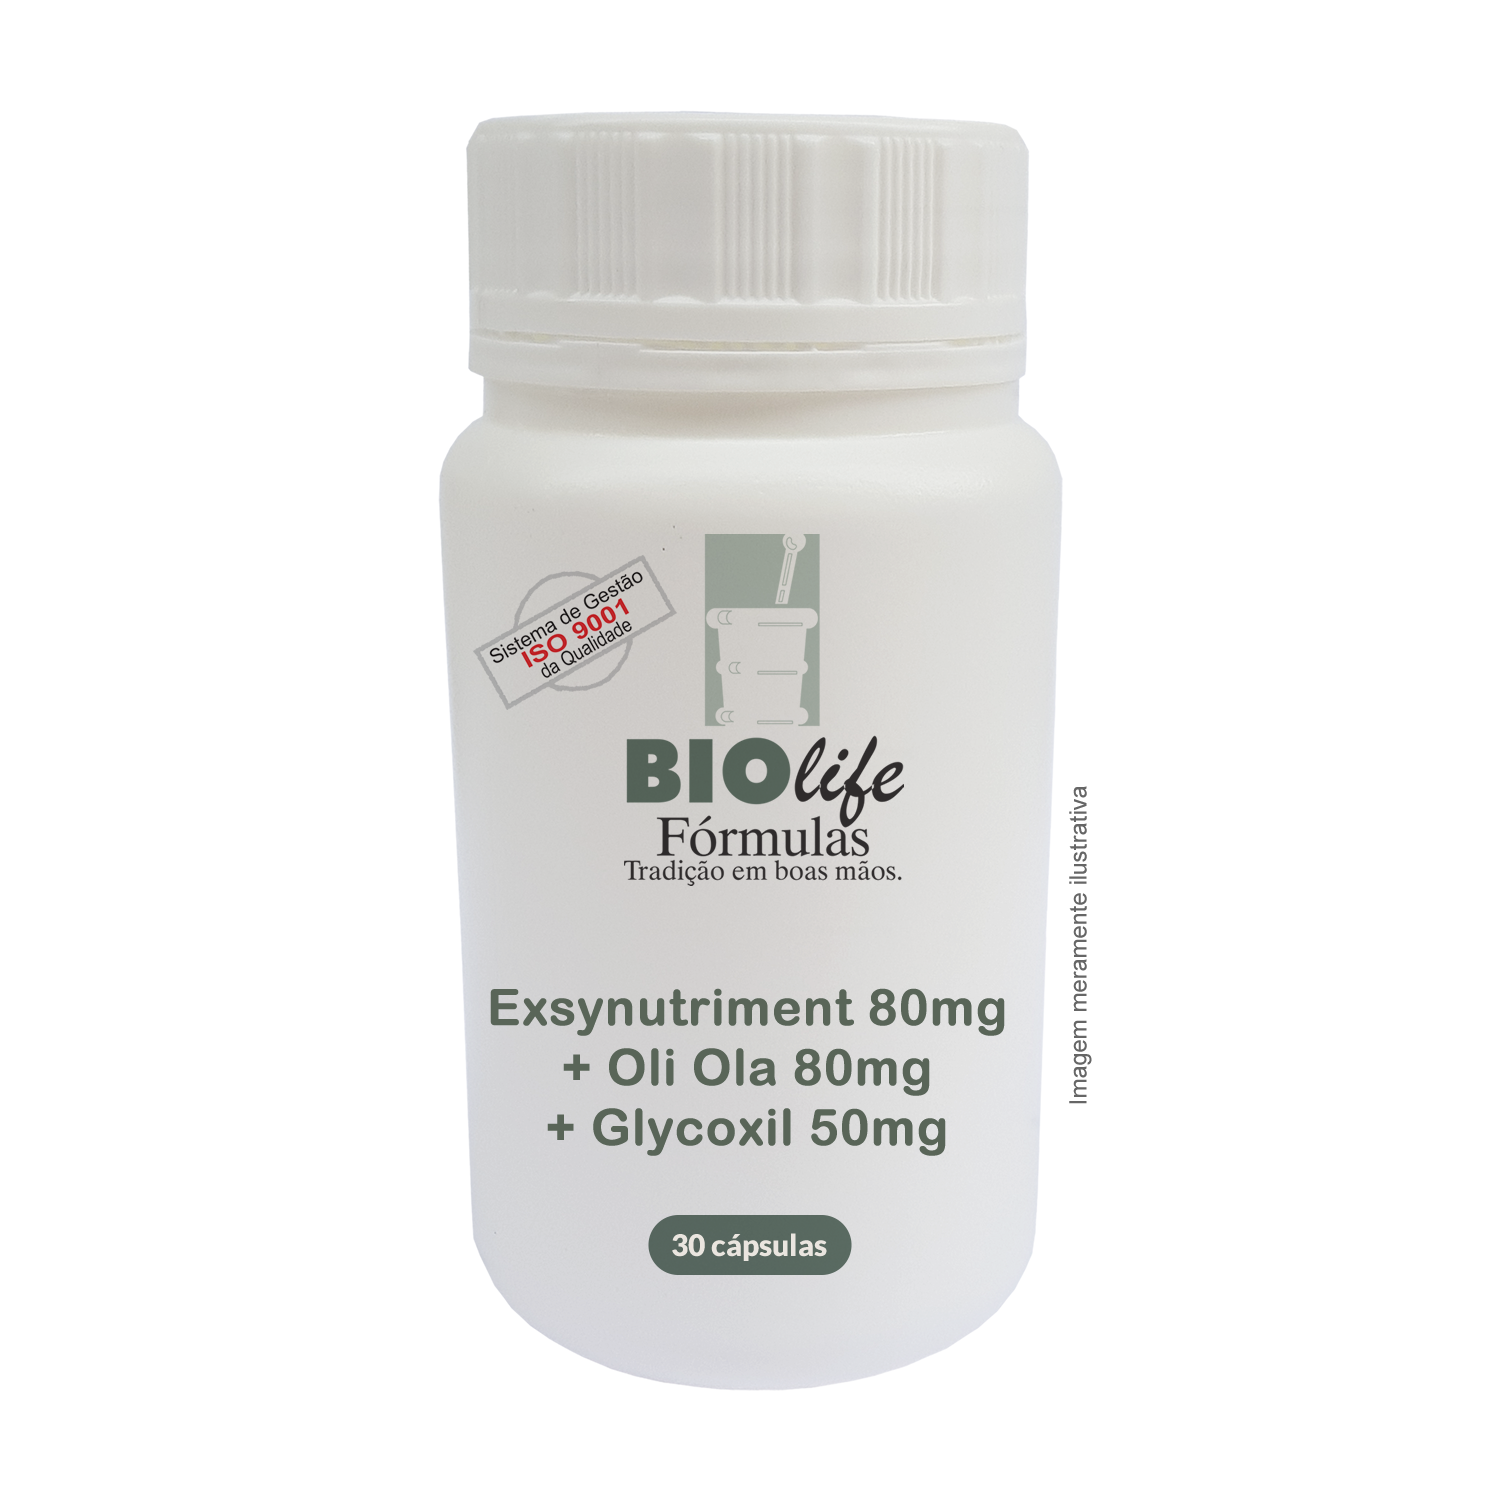 Exsynutriment 80mg + Oli Ola 80mg + Glycoxil 50mg - BioLife